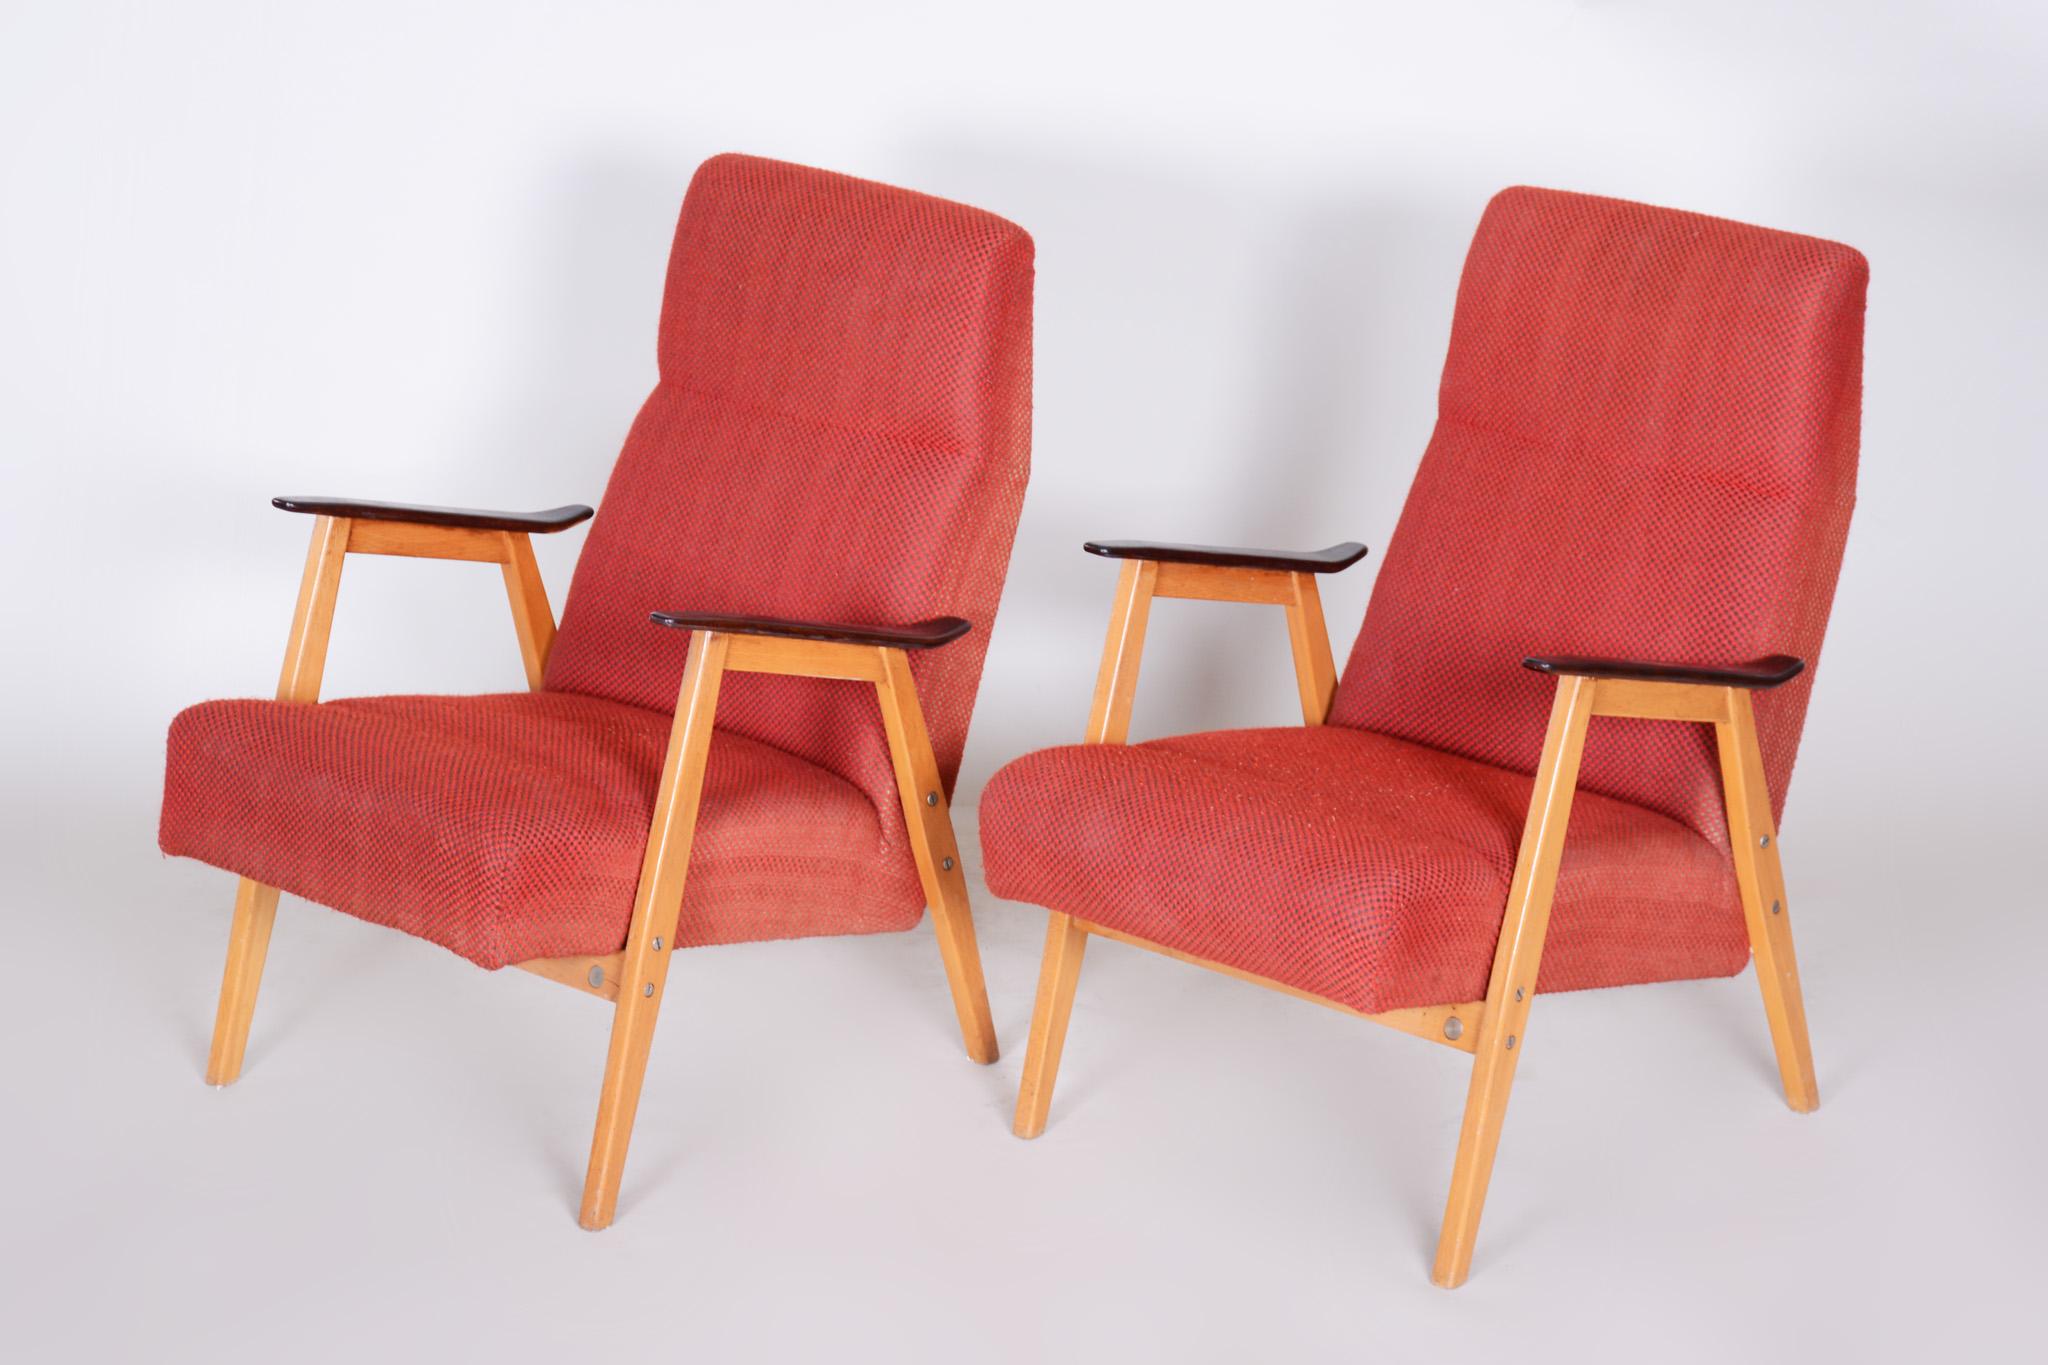 Upholstery Pair of Restored Red Midcentury Armchairs, Made by Jaroslav Šmídek, Czechia 1950 For Sale